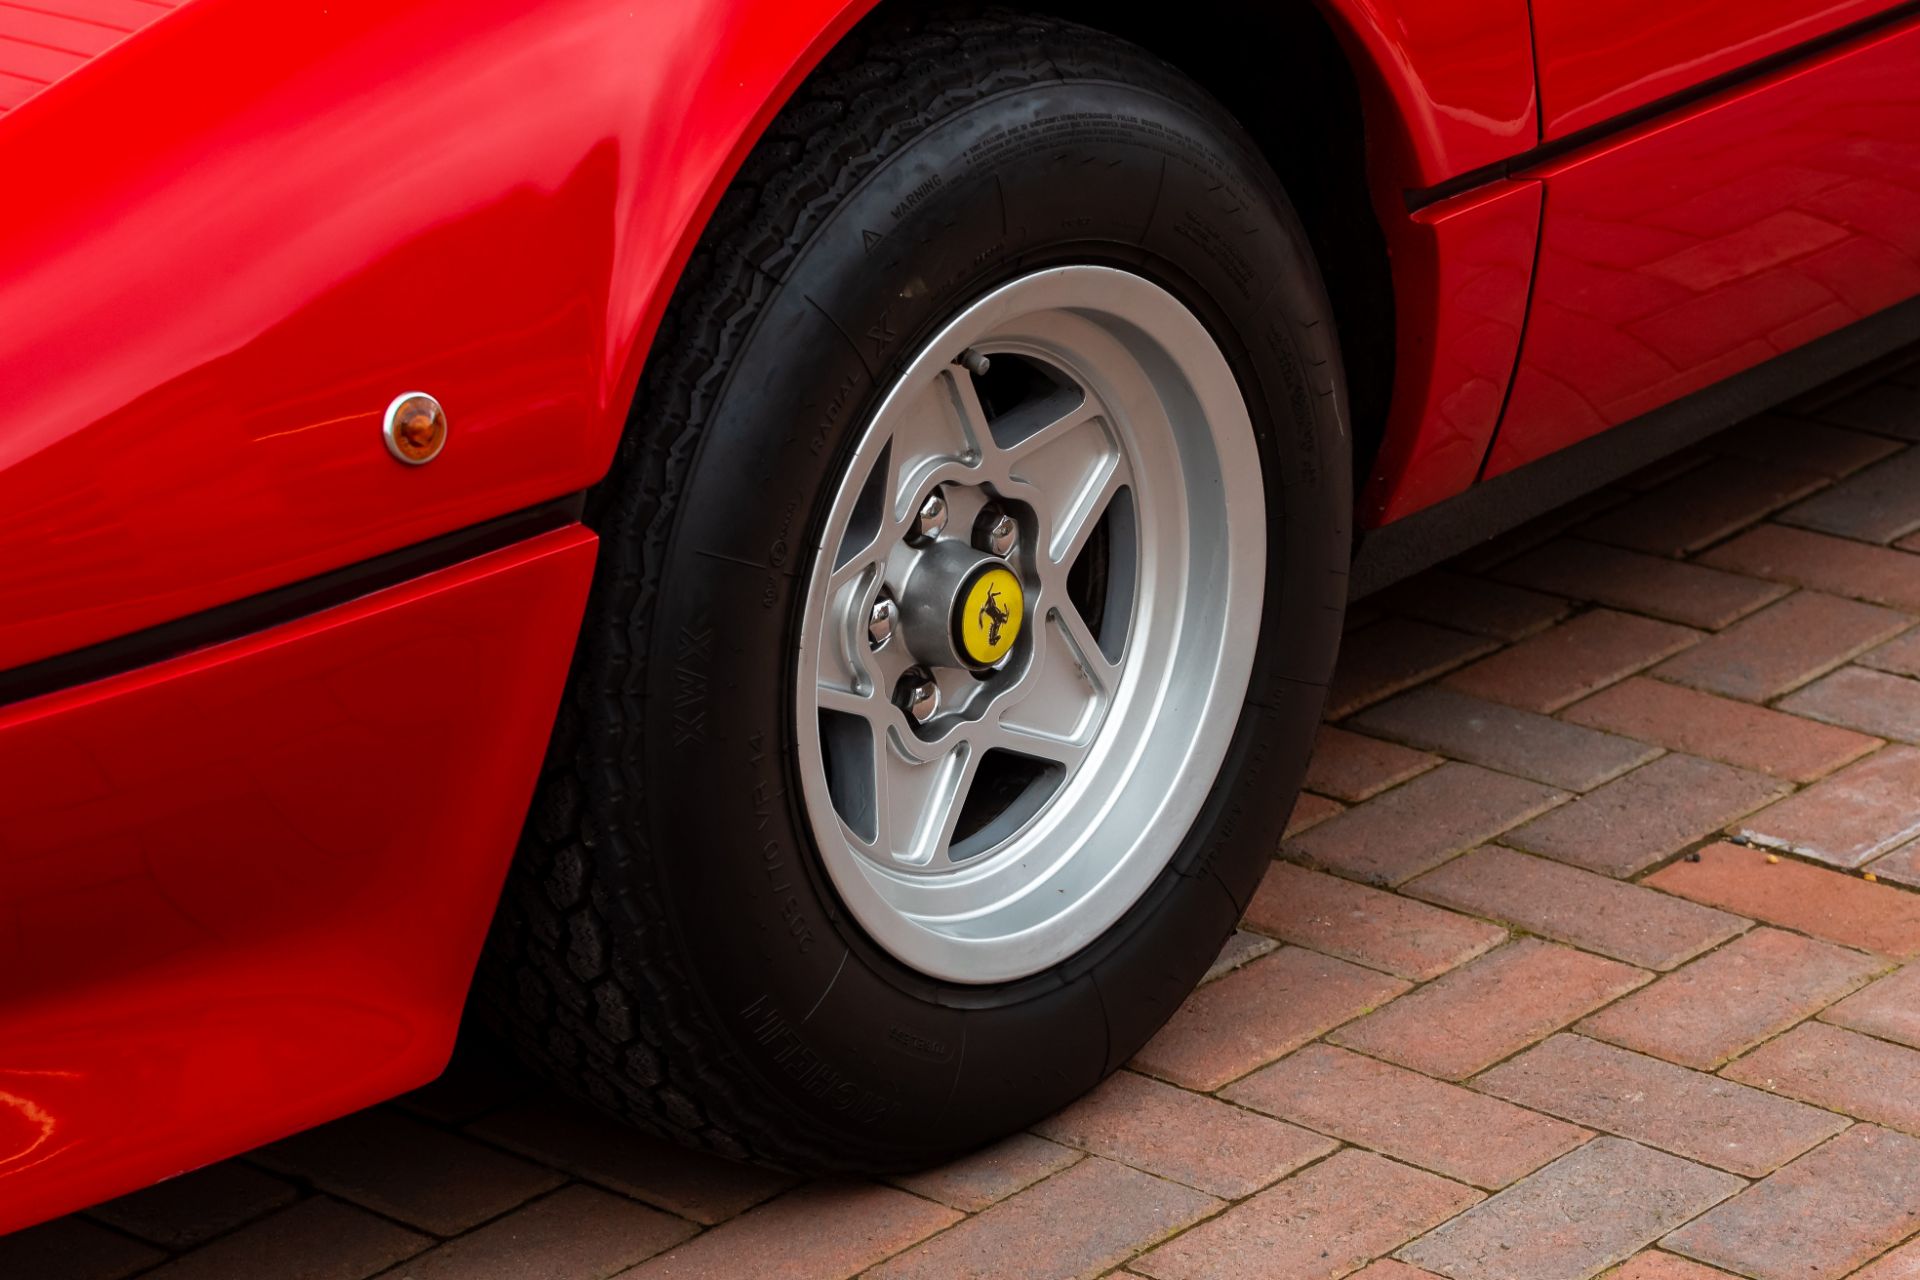 1979 Ferrari 308 GTS - Image 17 of 50